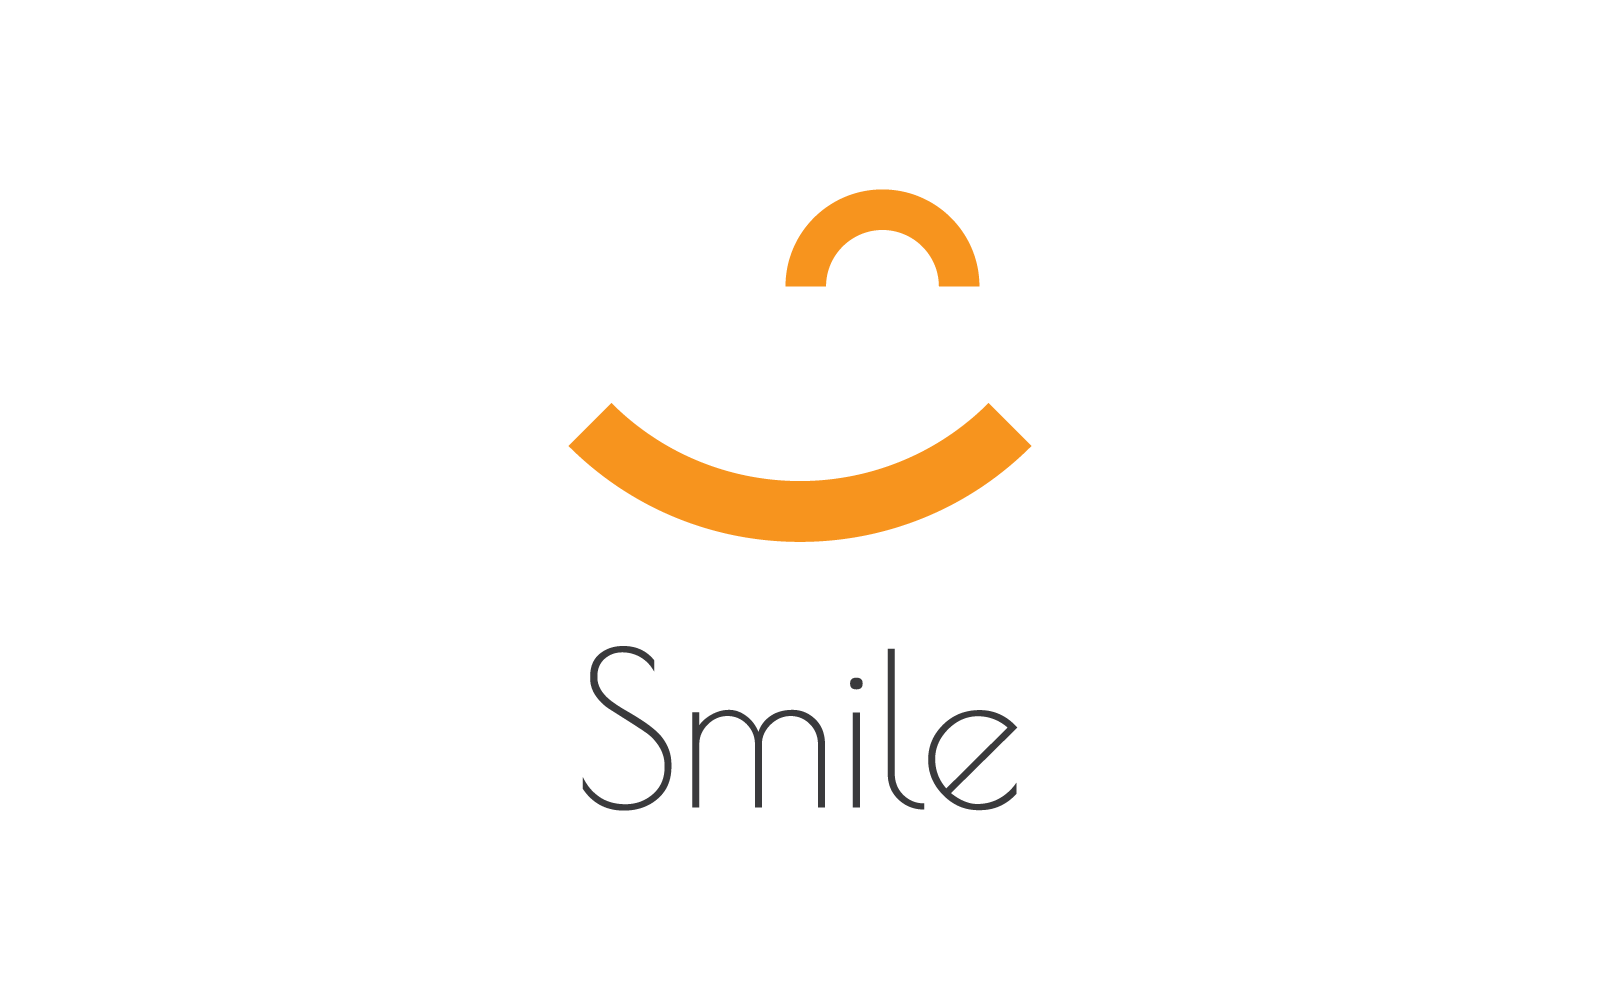 Smile happy face vector illustration design